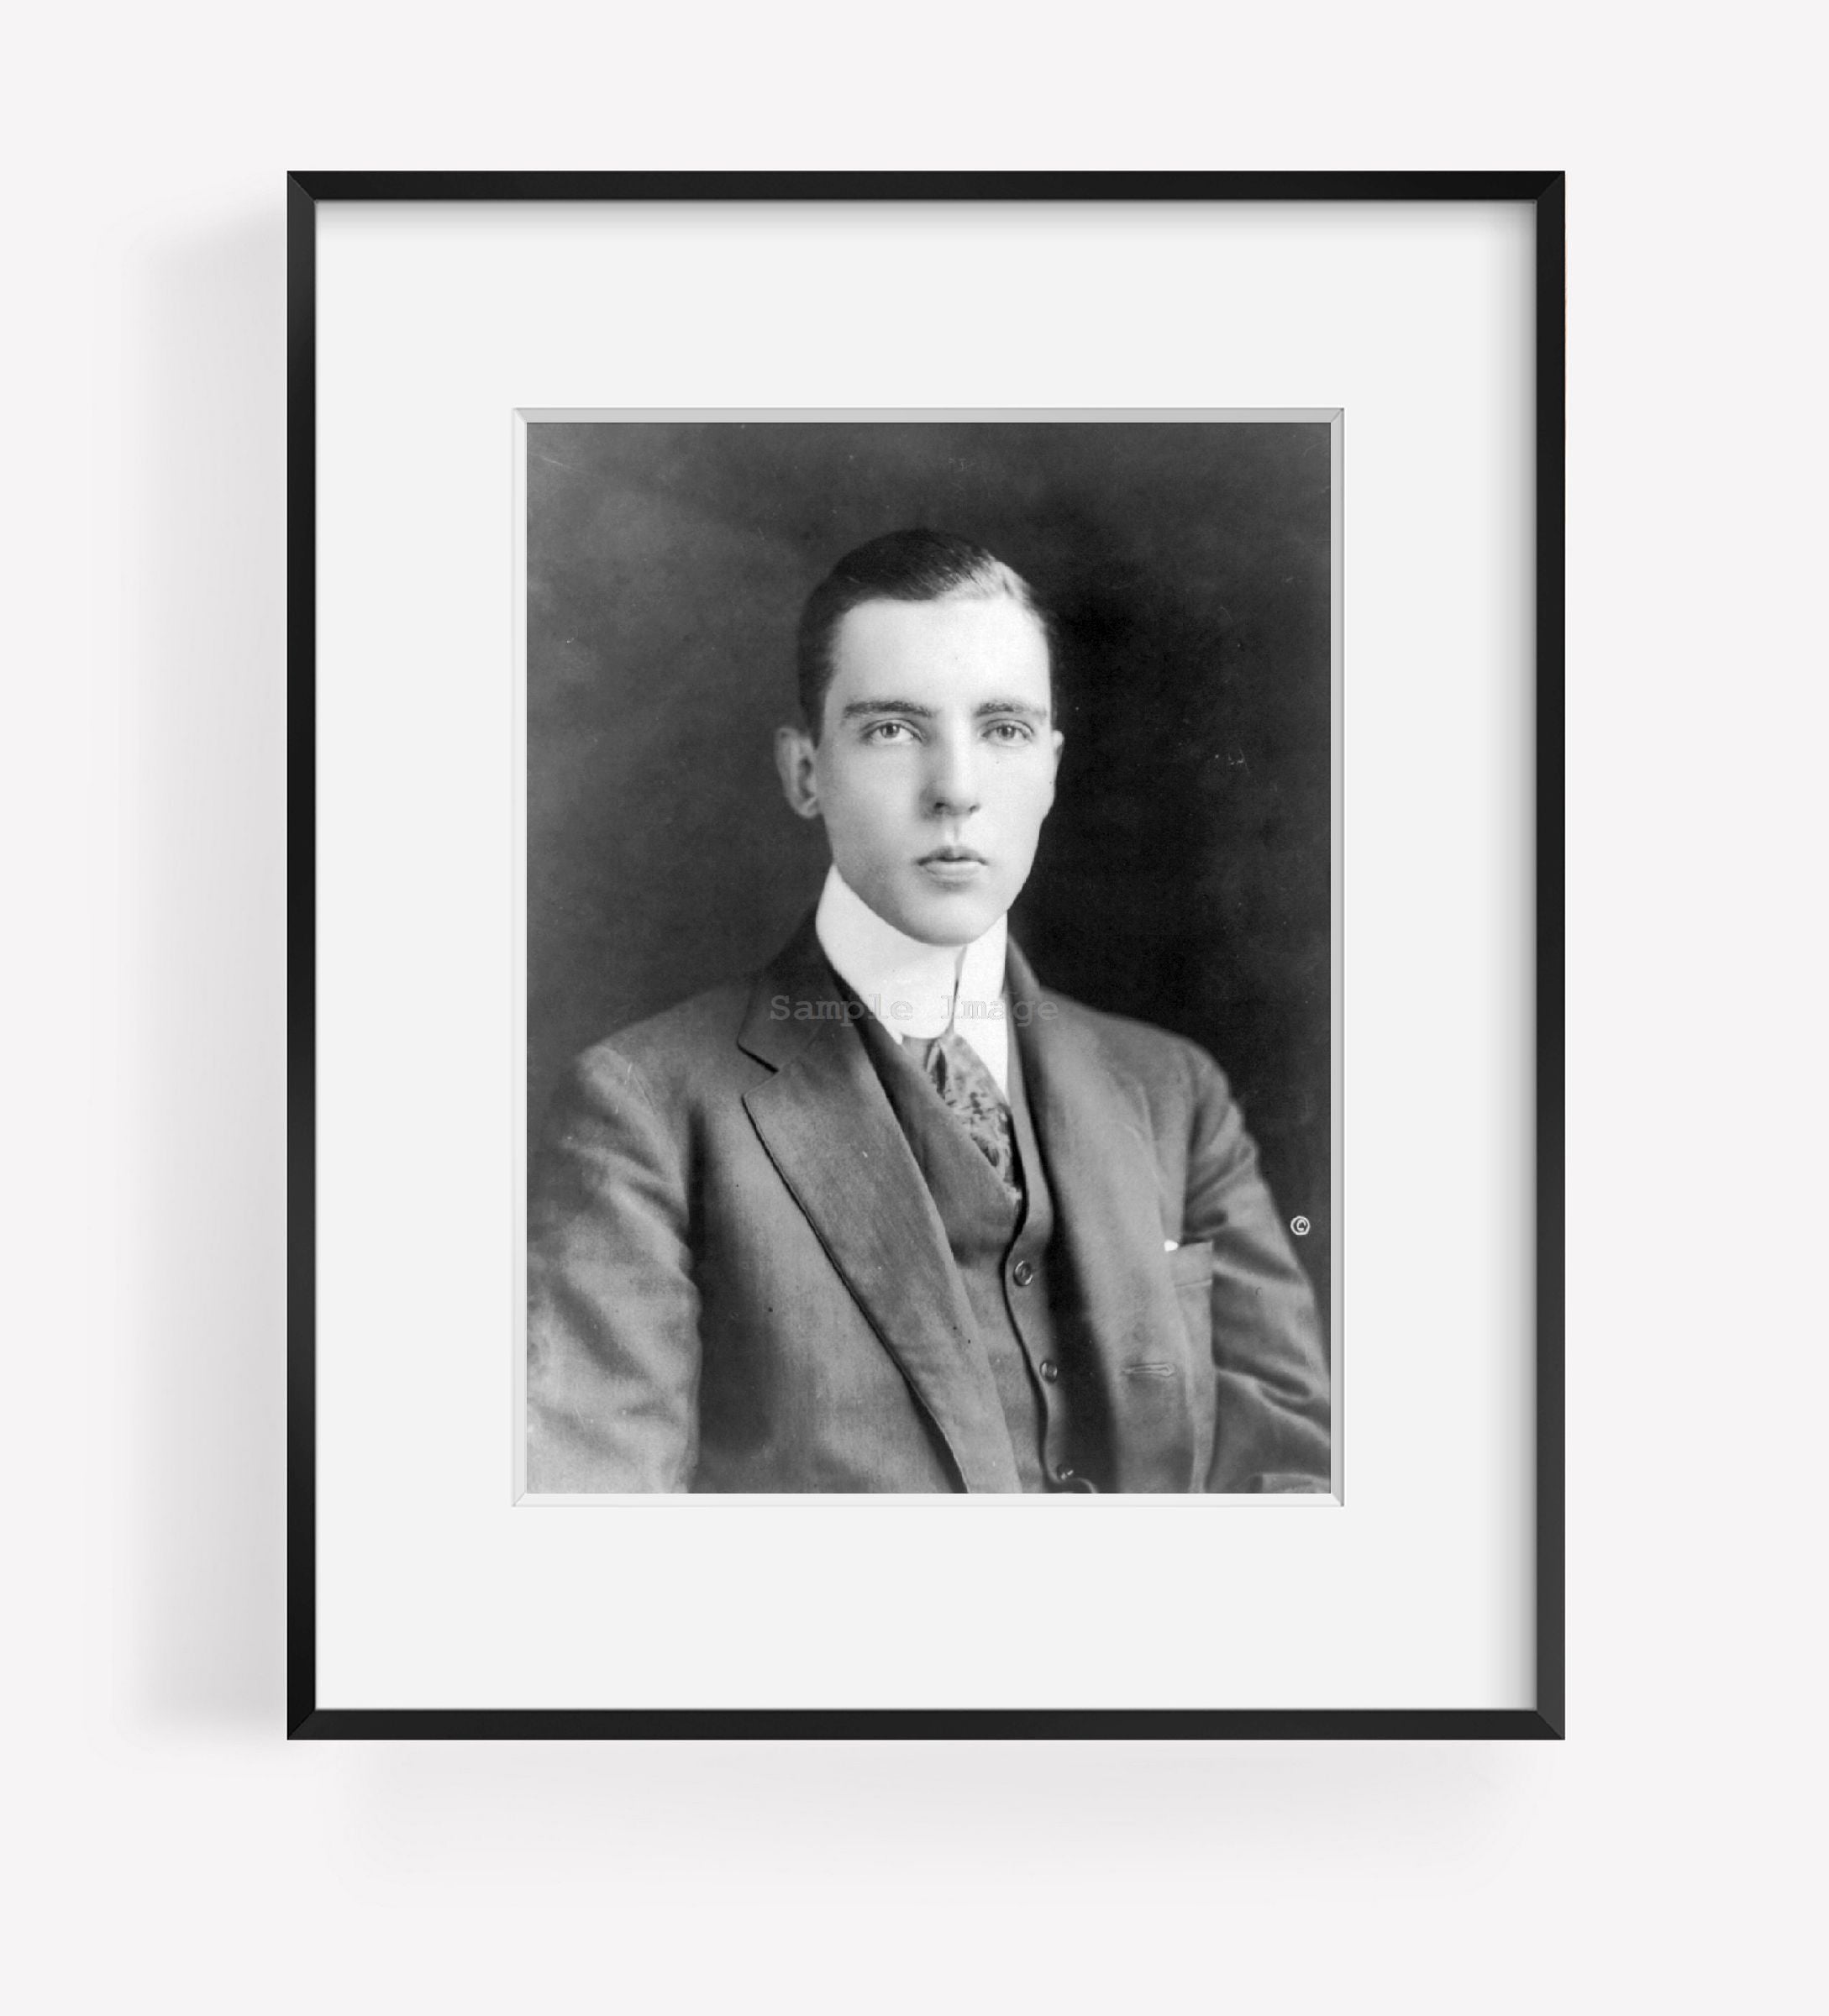 c1912 photograph of William Vincent Astor, 1891-1959